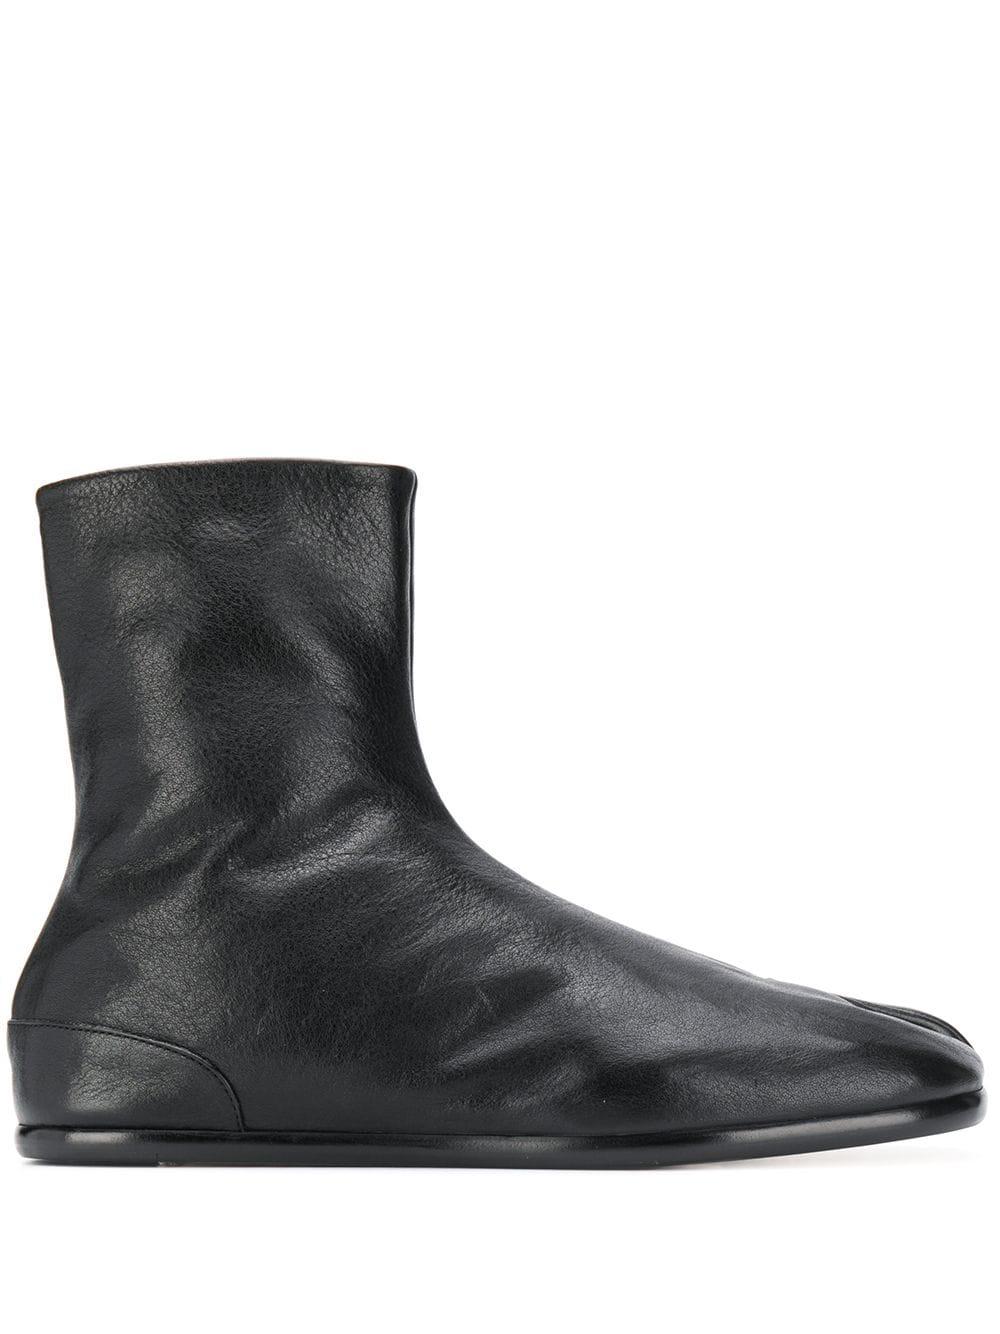 Maison Margiela Leather Tabi Slip Boots in Black for Men - Lyst